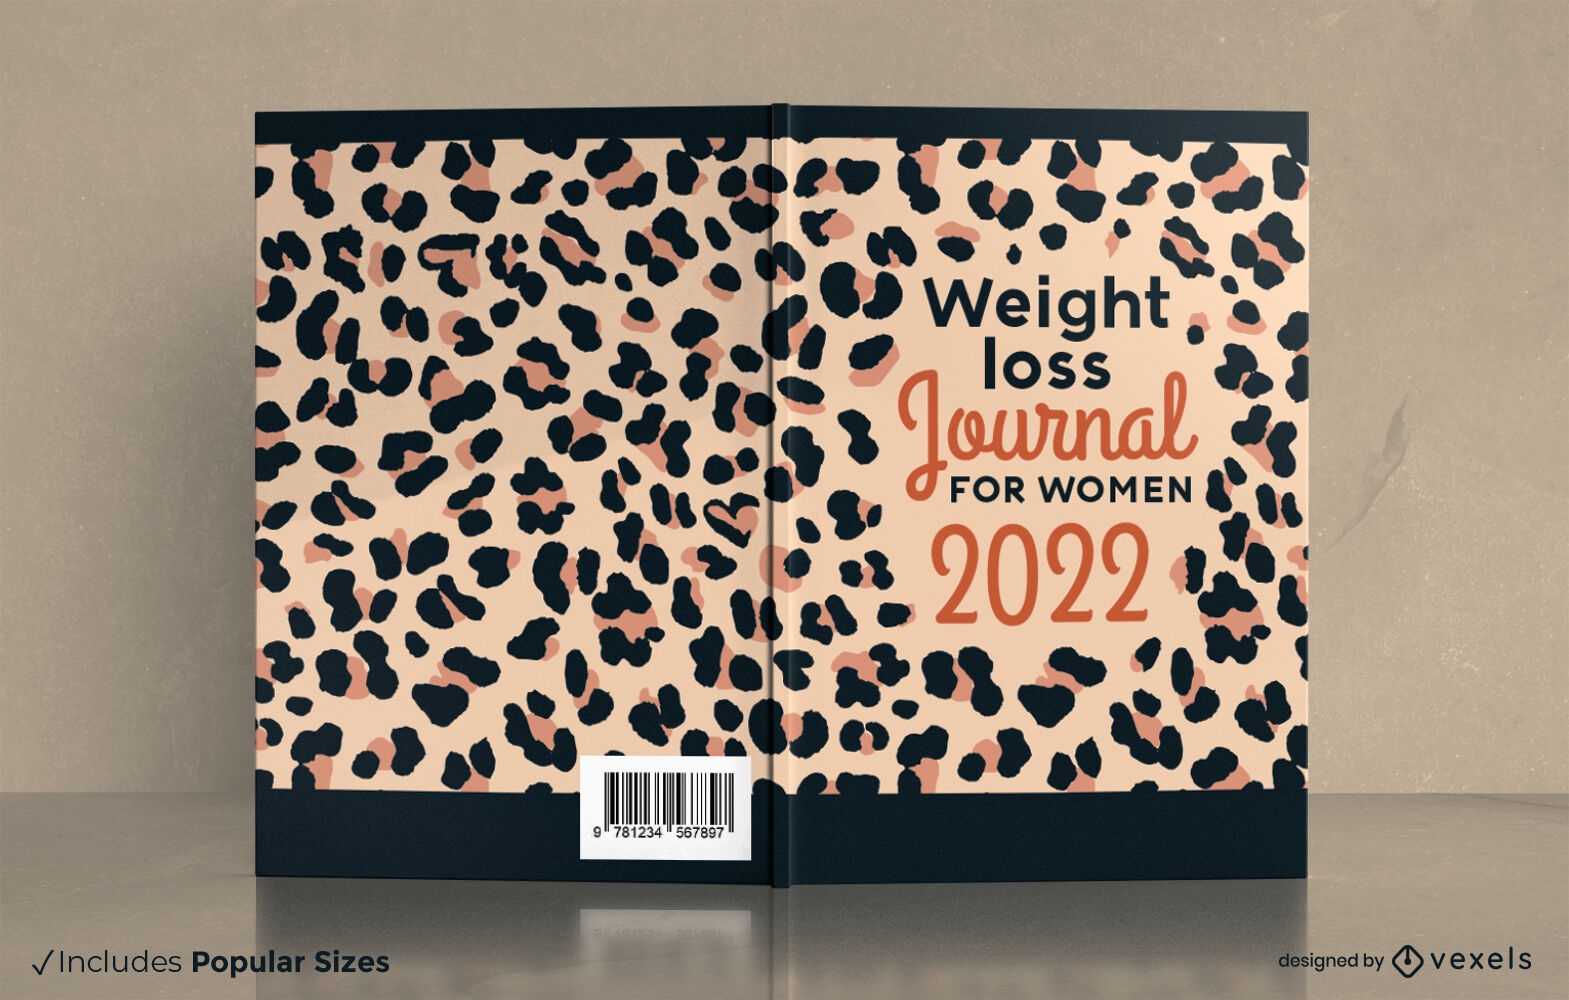 Weight loss journal book cover design